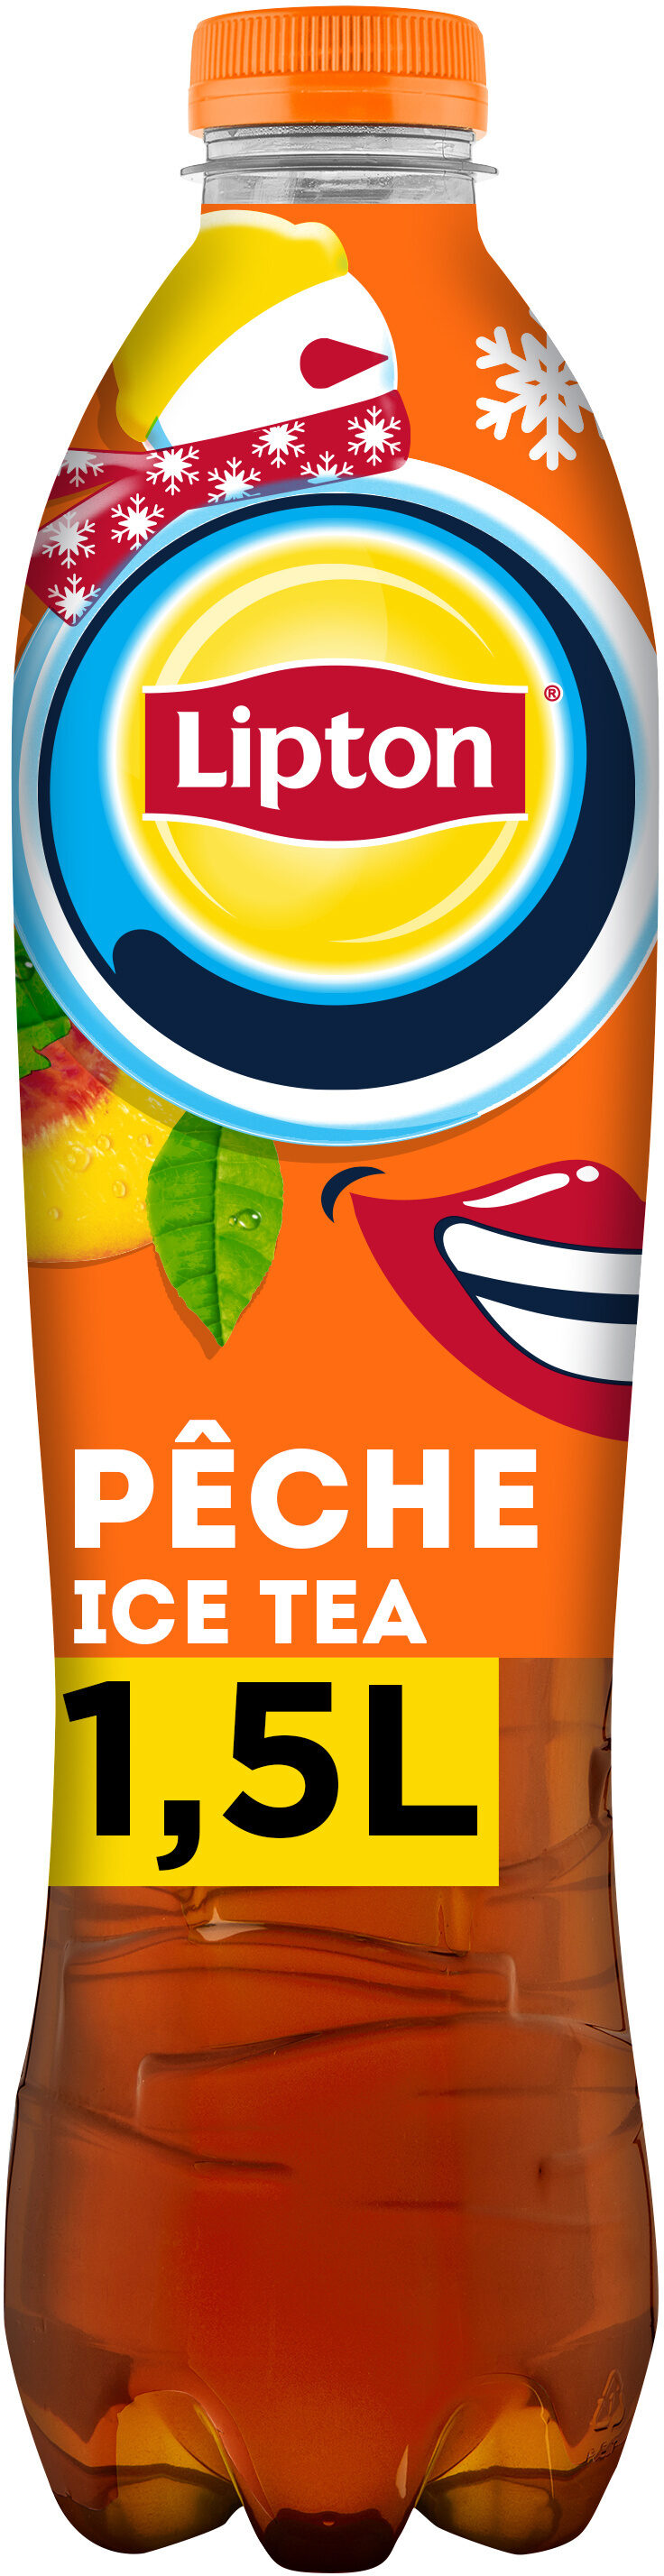 Lipton Ice Tea saveur pêche 1,5 L - Produit - fr